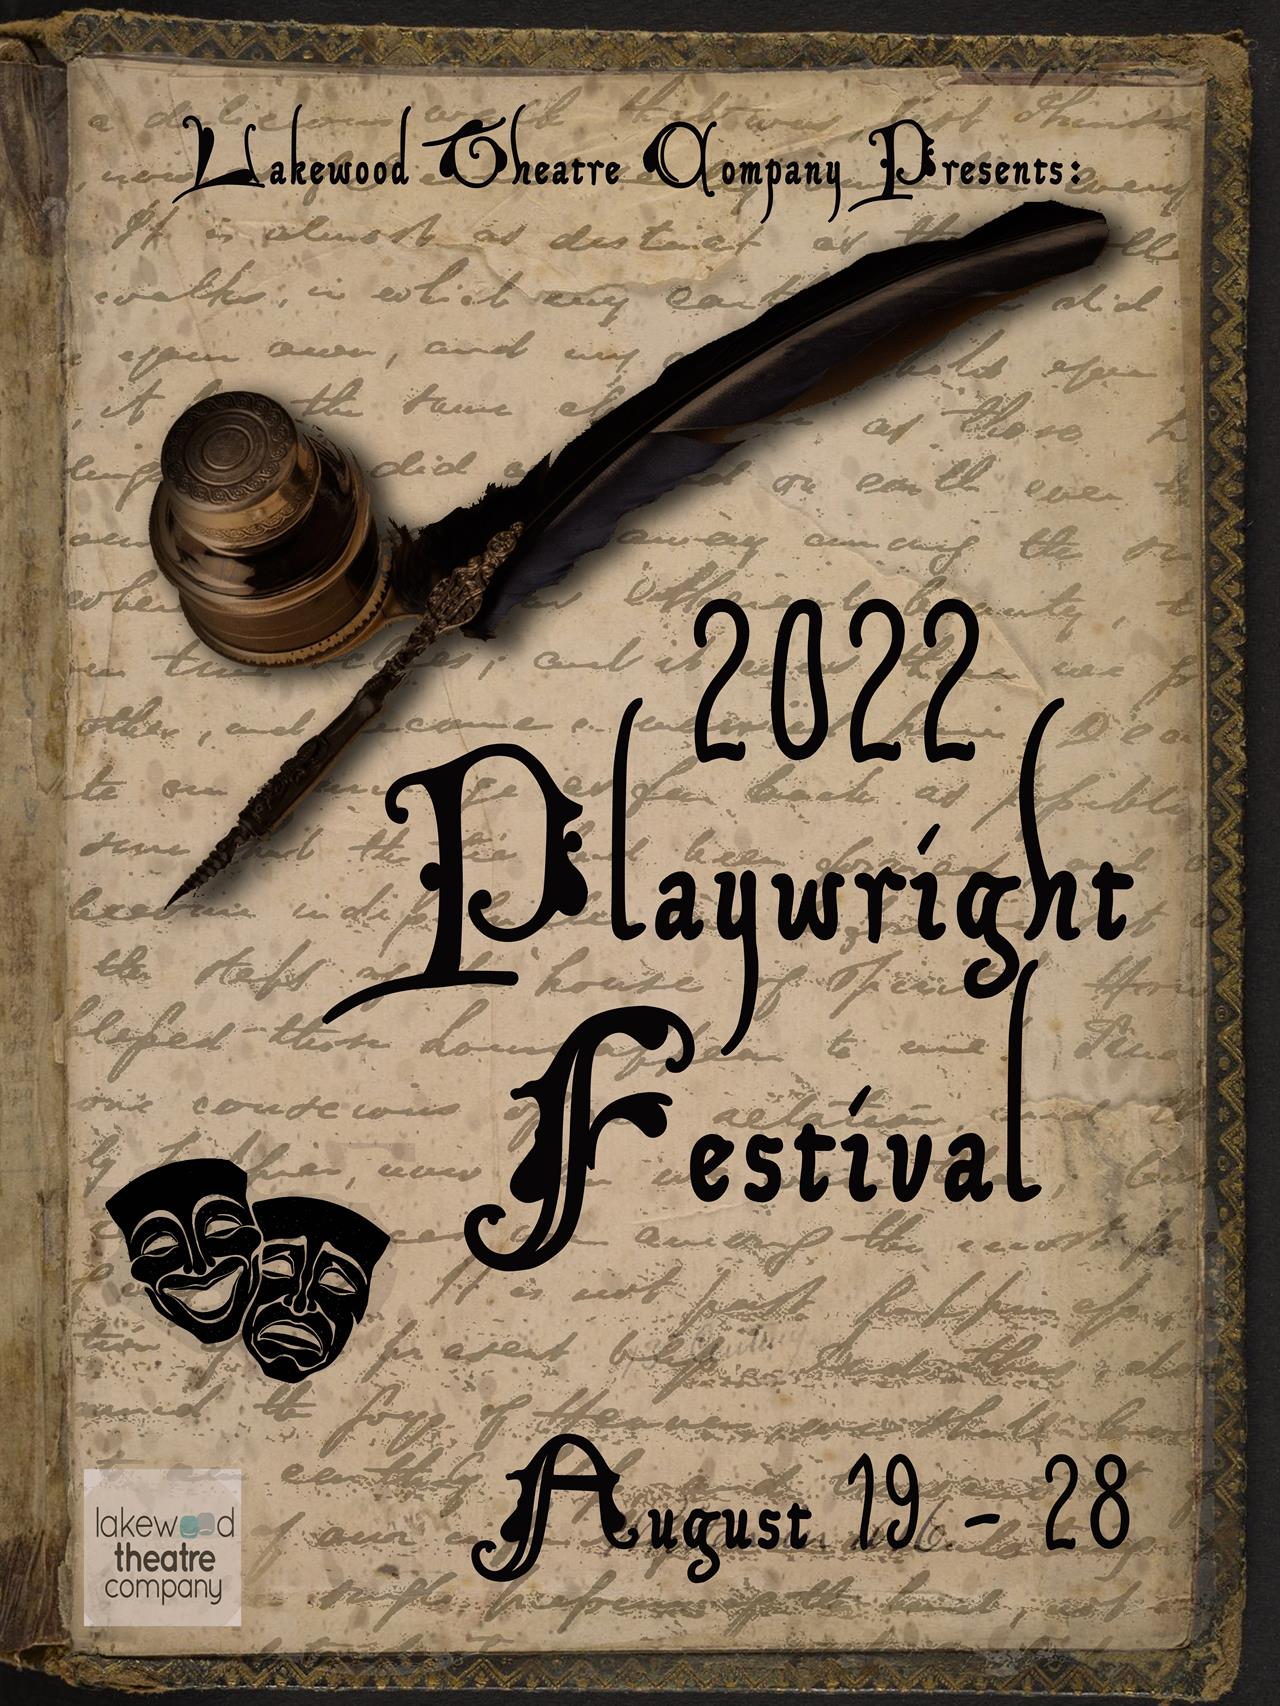 Playwright Festival